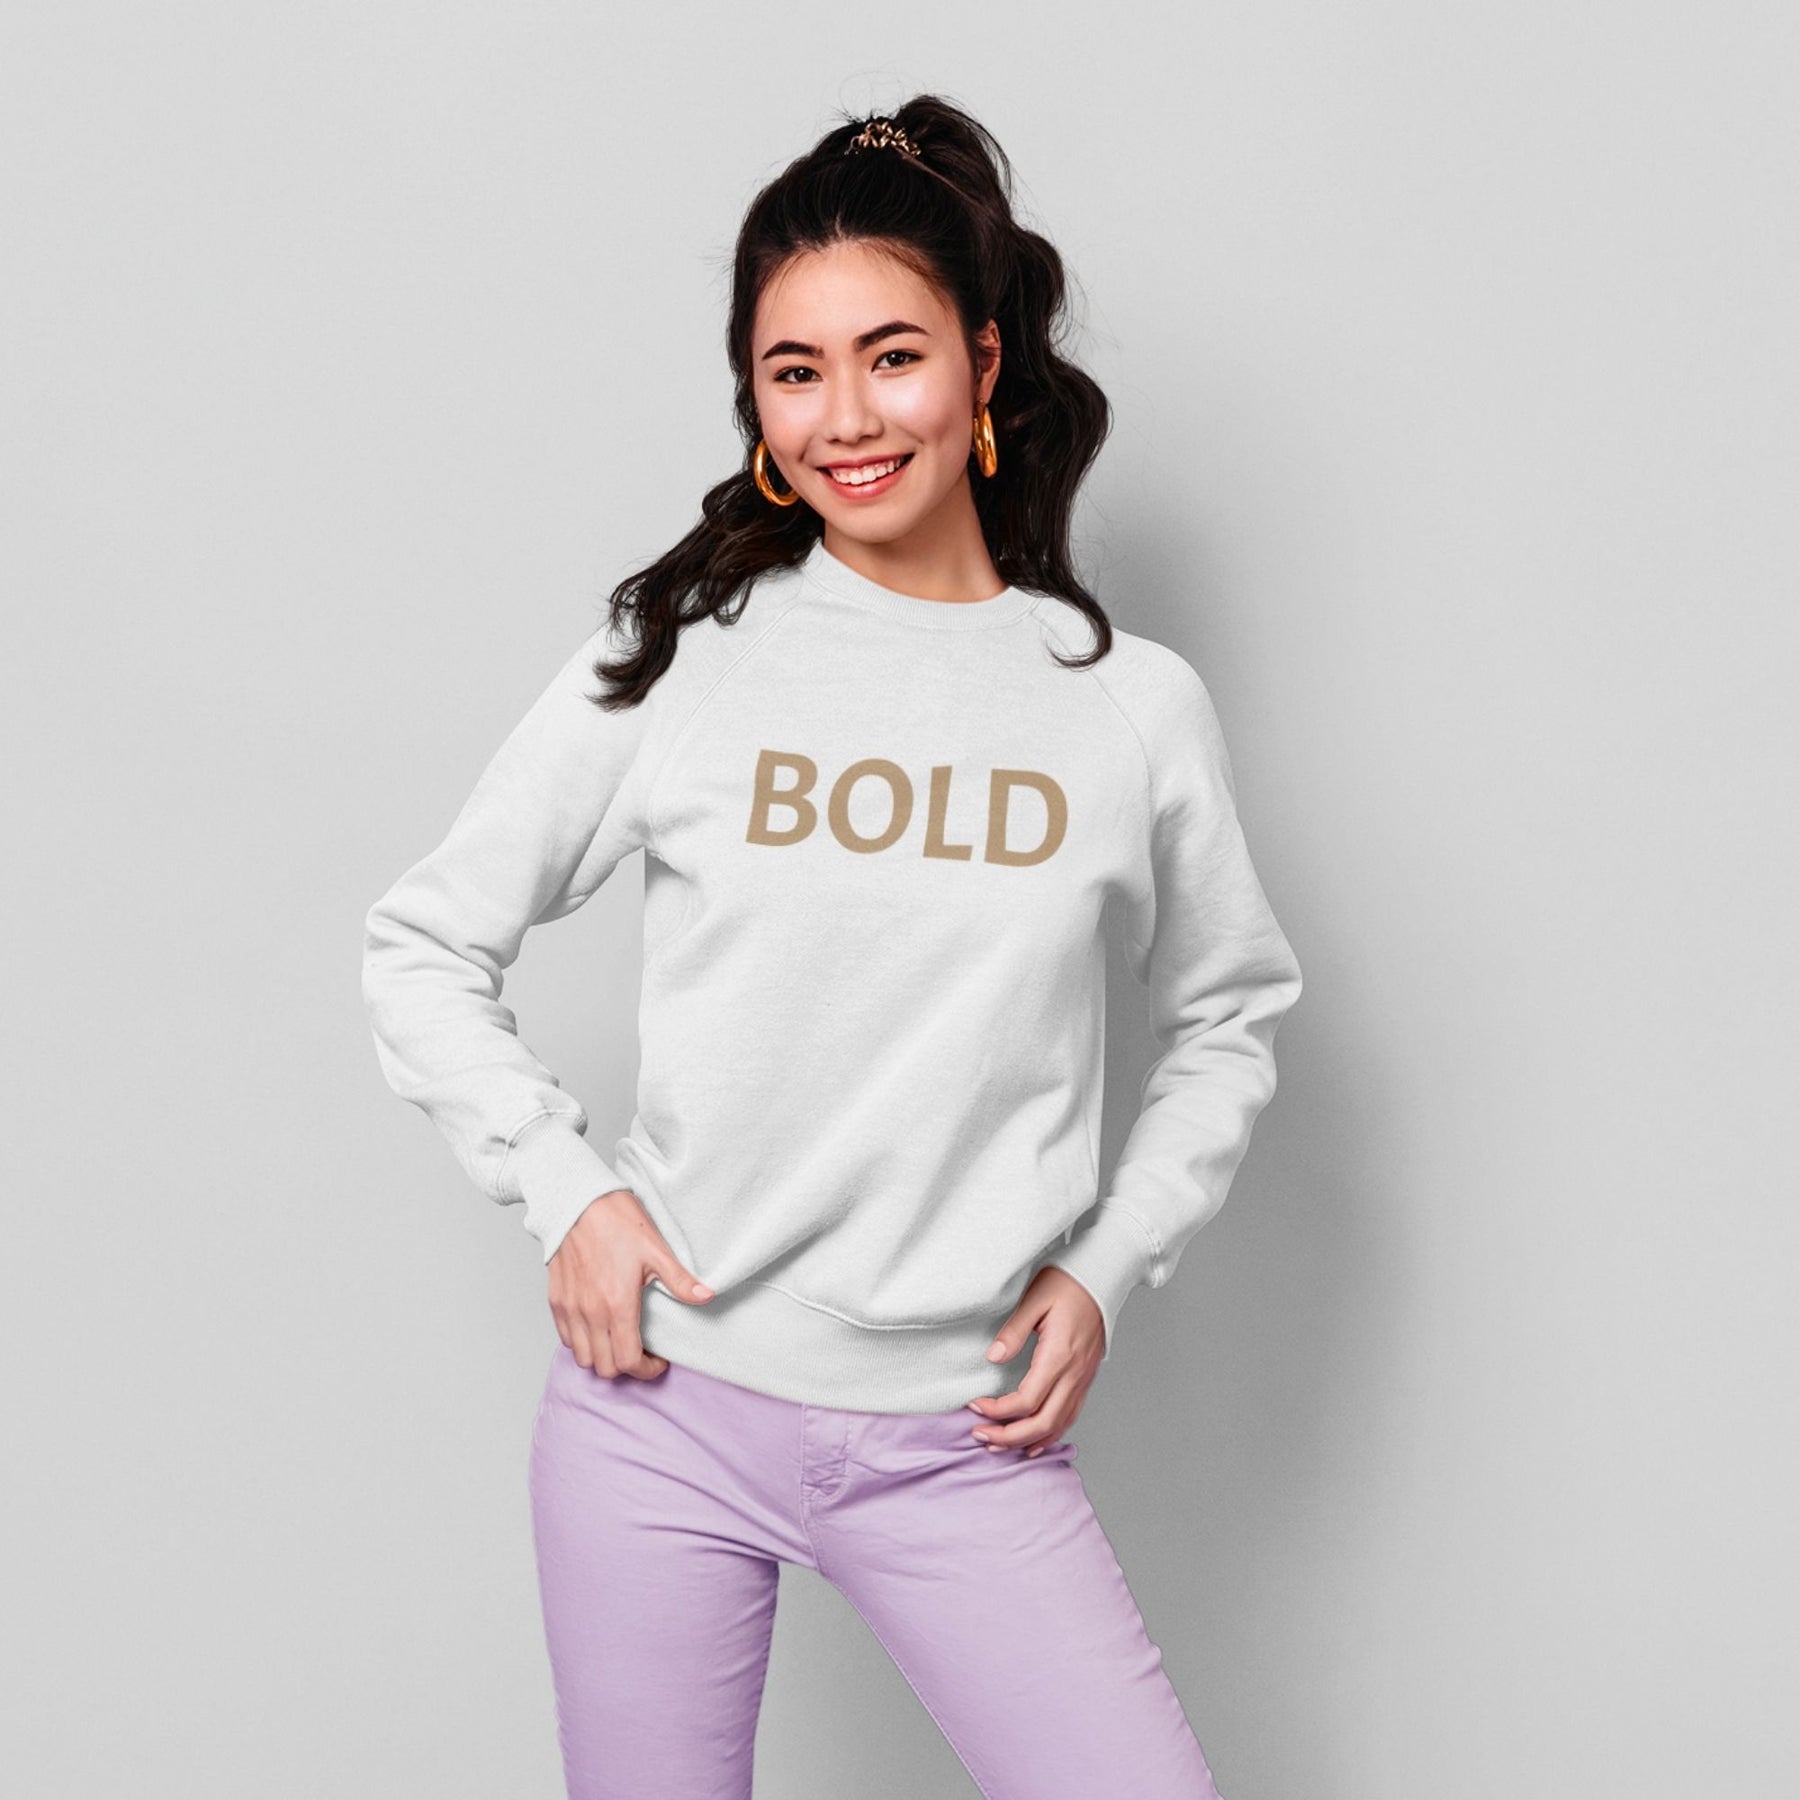 bold-cotton-printed-unisex-white-female-model-sweatshirt-gogirgit-com